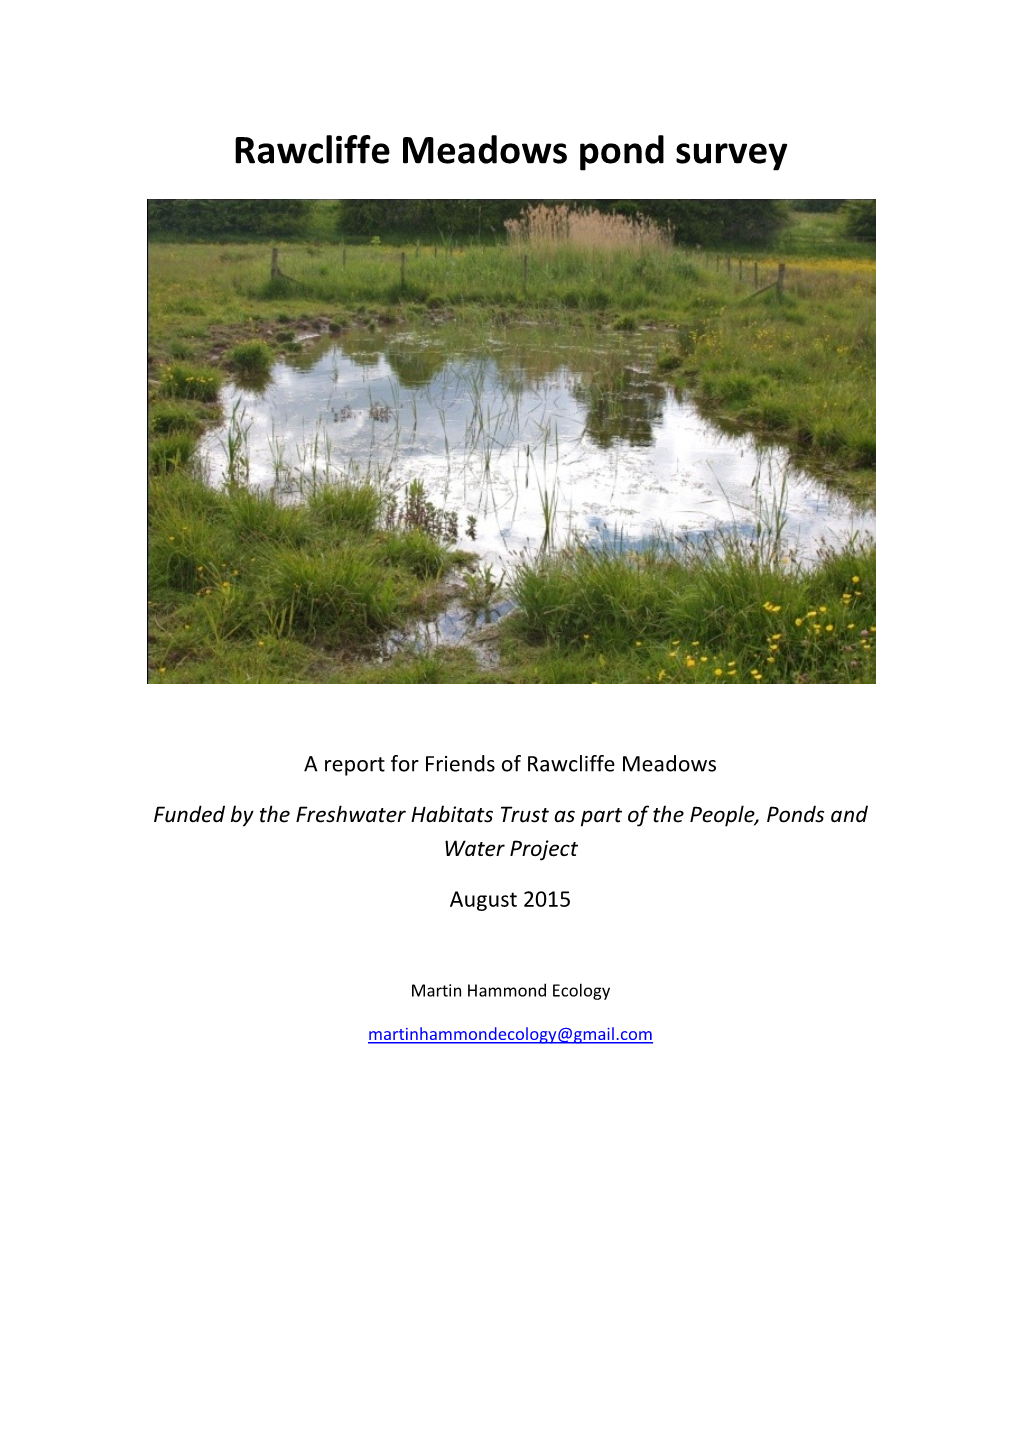 Rawcliffe Meadows Pond Survey